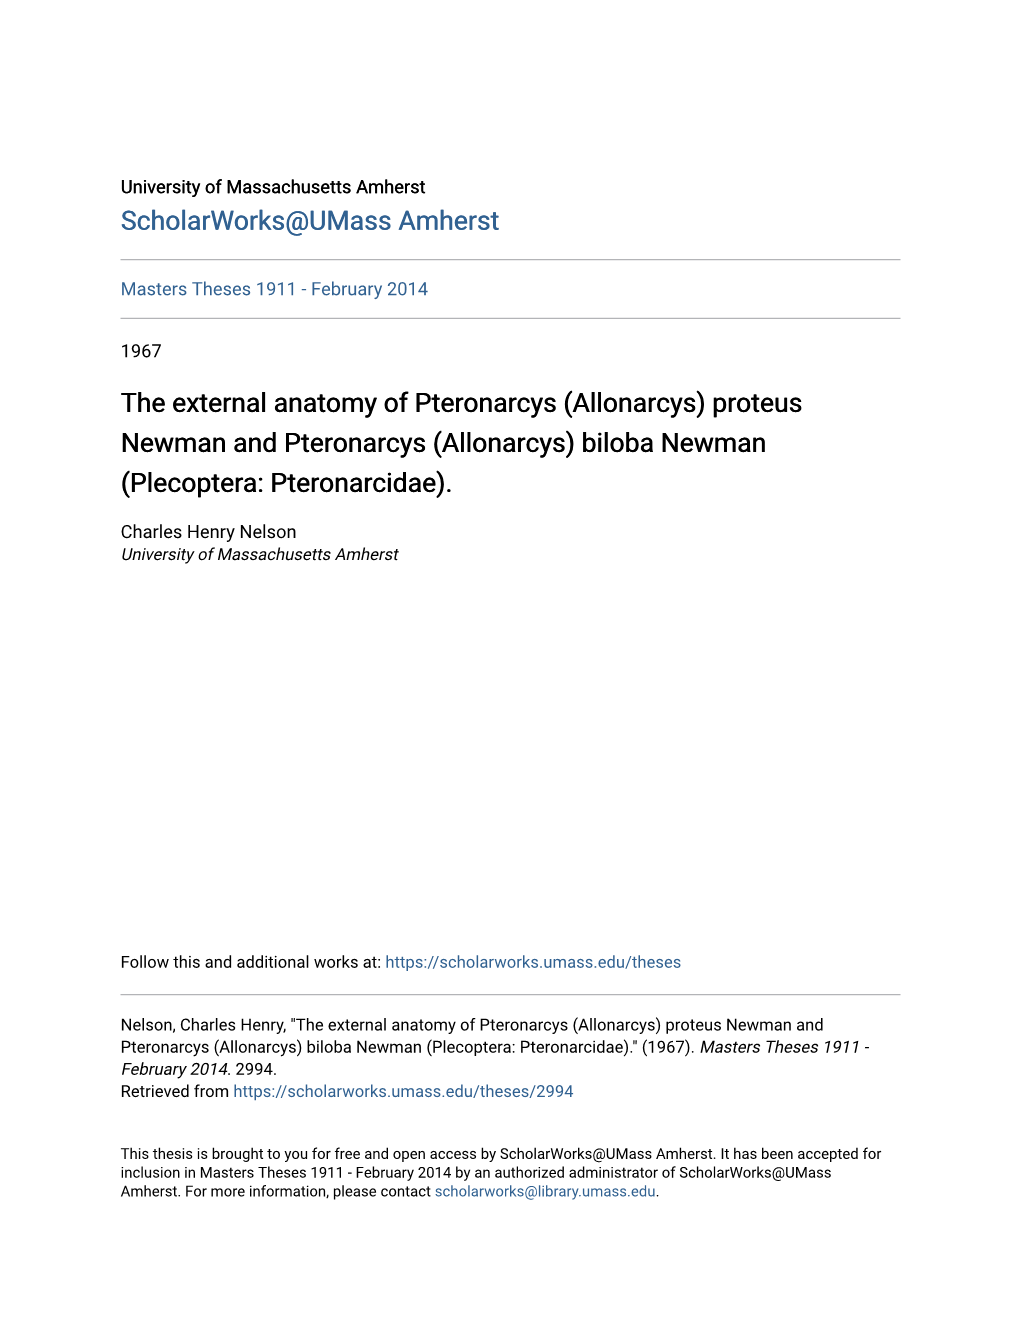 The External Anatomy of Pteronarcys (Allonarcys) Proteus Newman and Pteronarcys (Allonarcys) Biloba Newman (Plecoptera: Pteronarcidae)